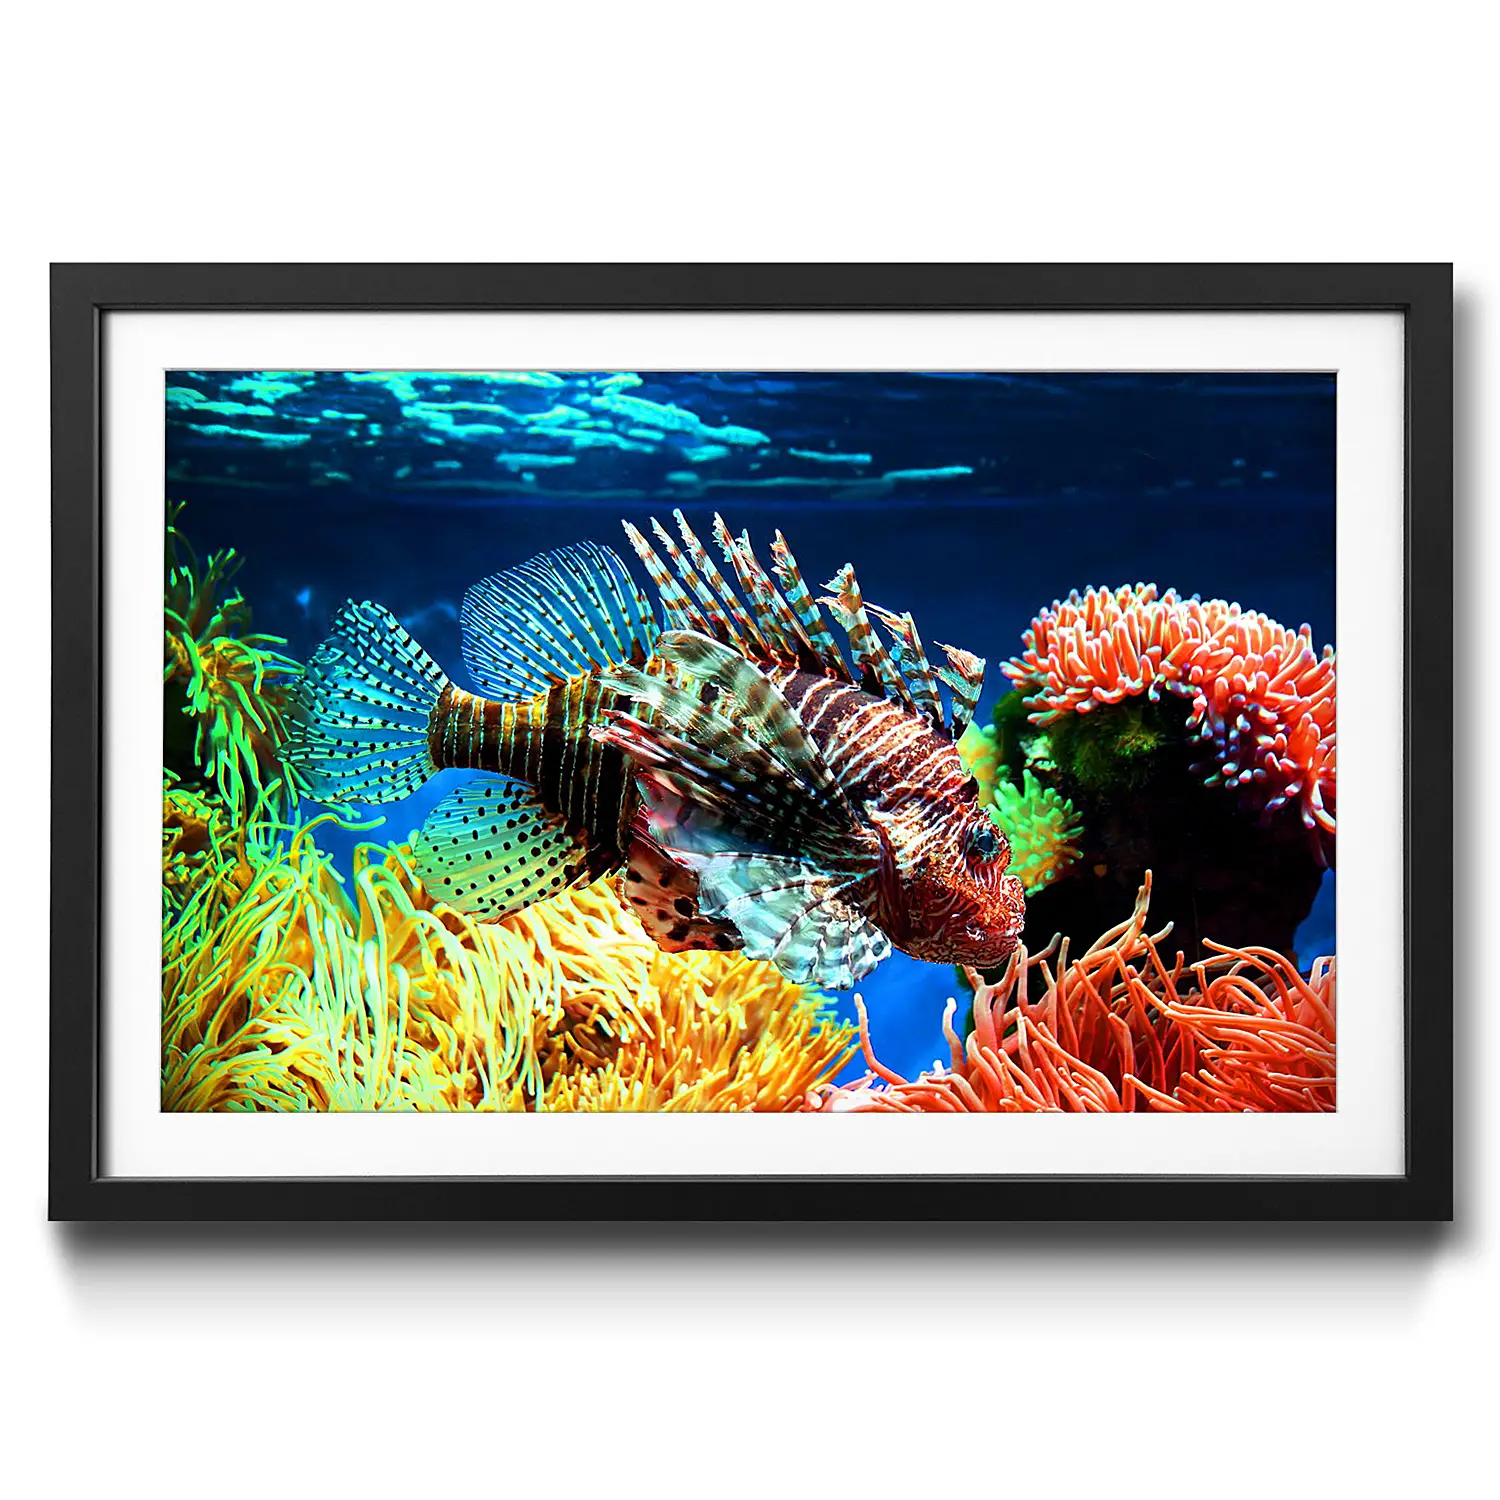 Gerahmtes Bild Lovely Reef